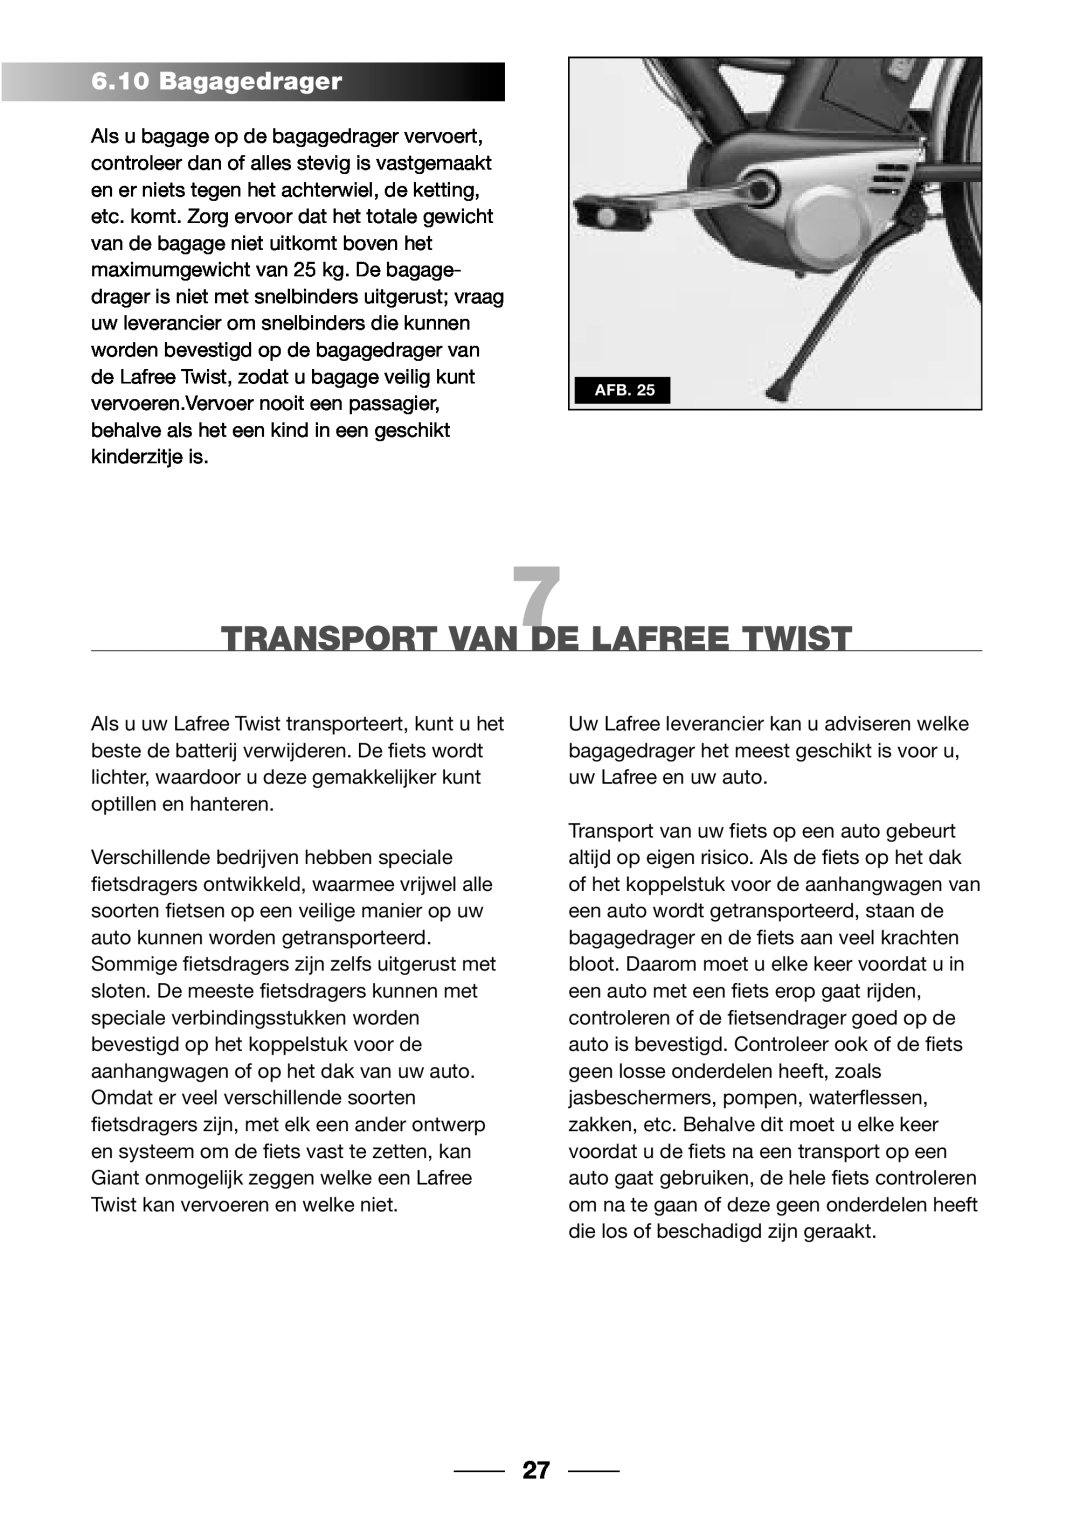 Giant 2002 Motorized Bicycle owner manual Transport Van De Lafree Twist, 6.10Bagagedrager 